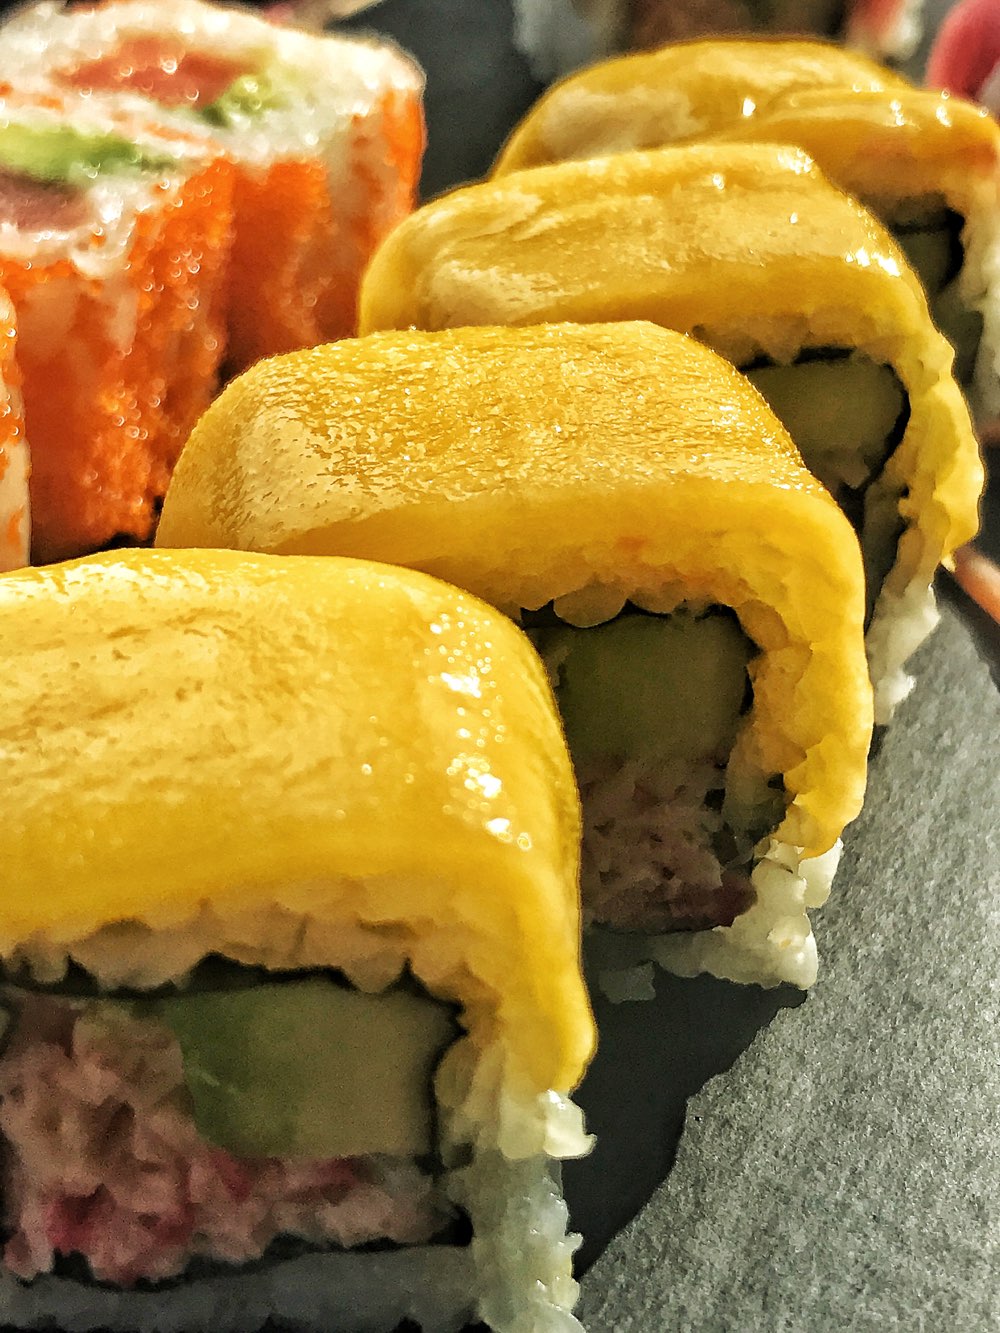 ichiban-sushi-delivery82017-01-06-09-19-14